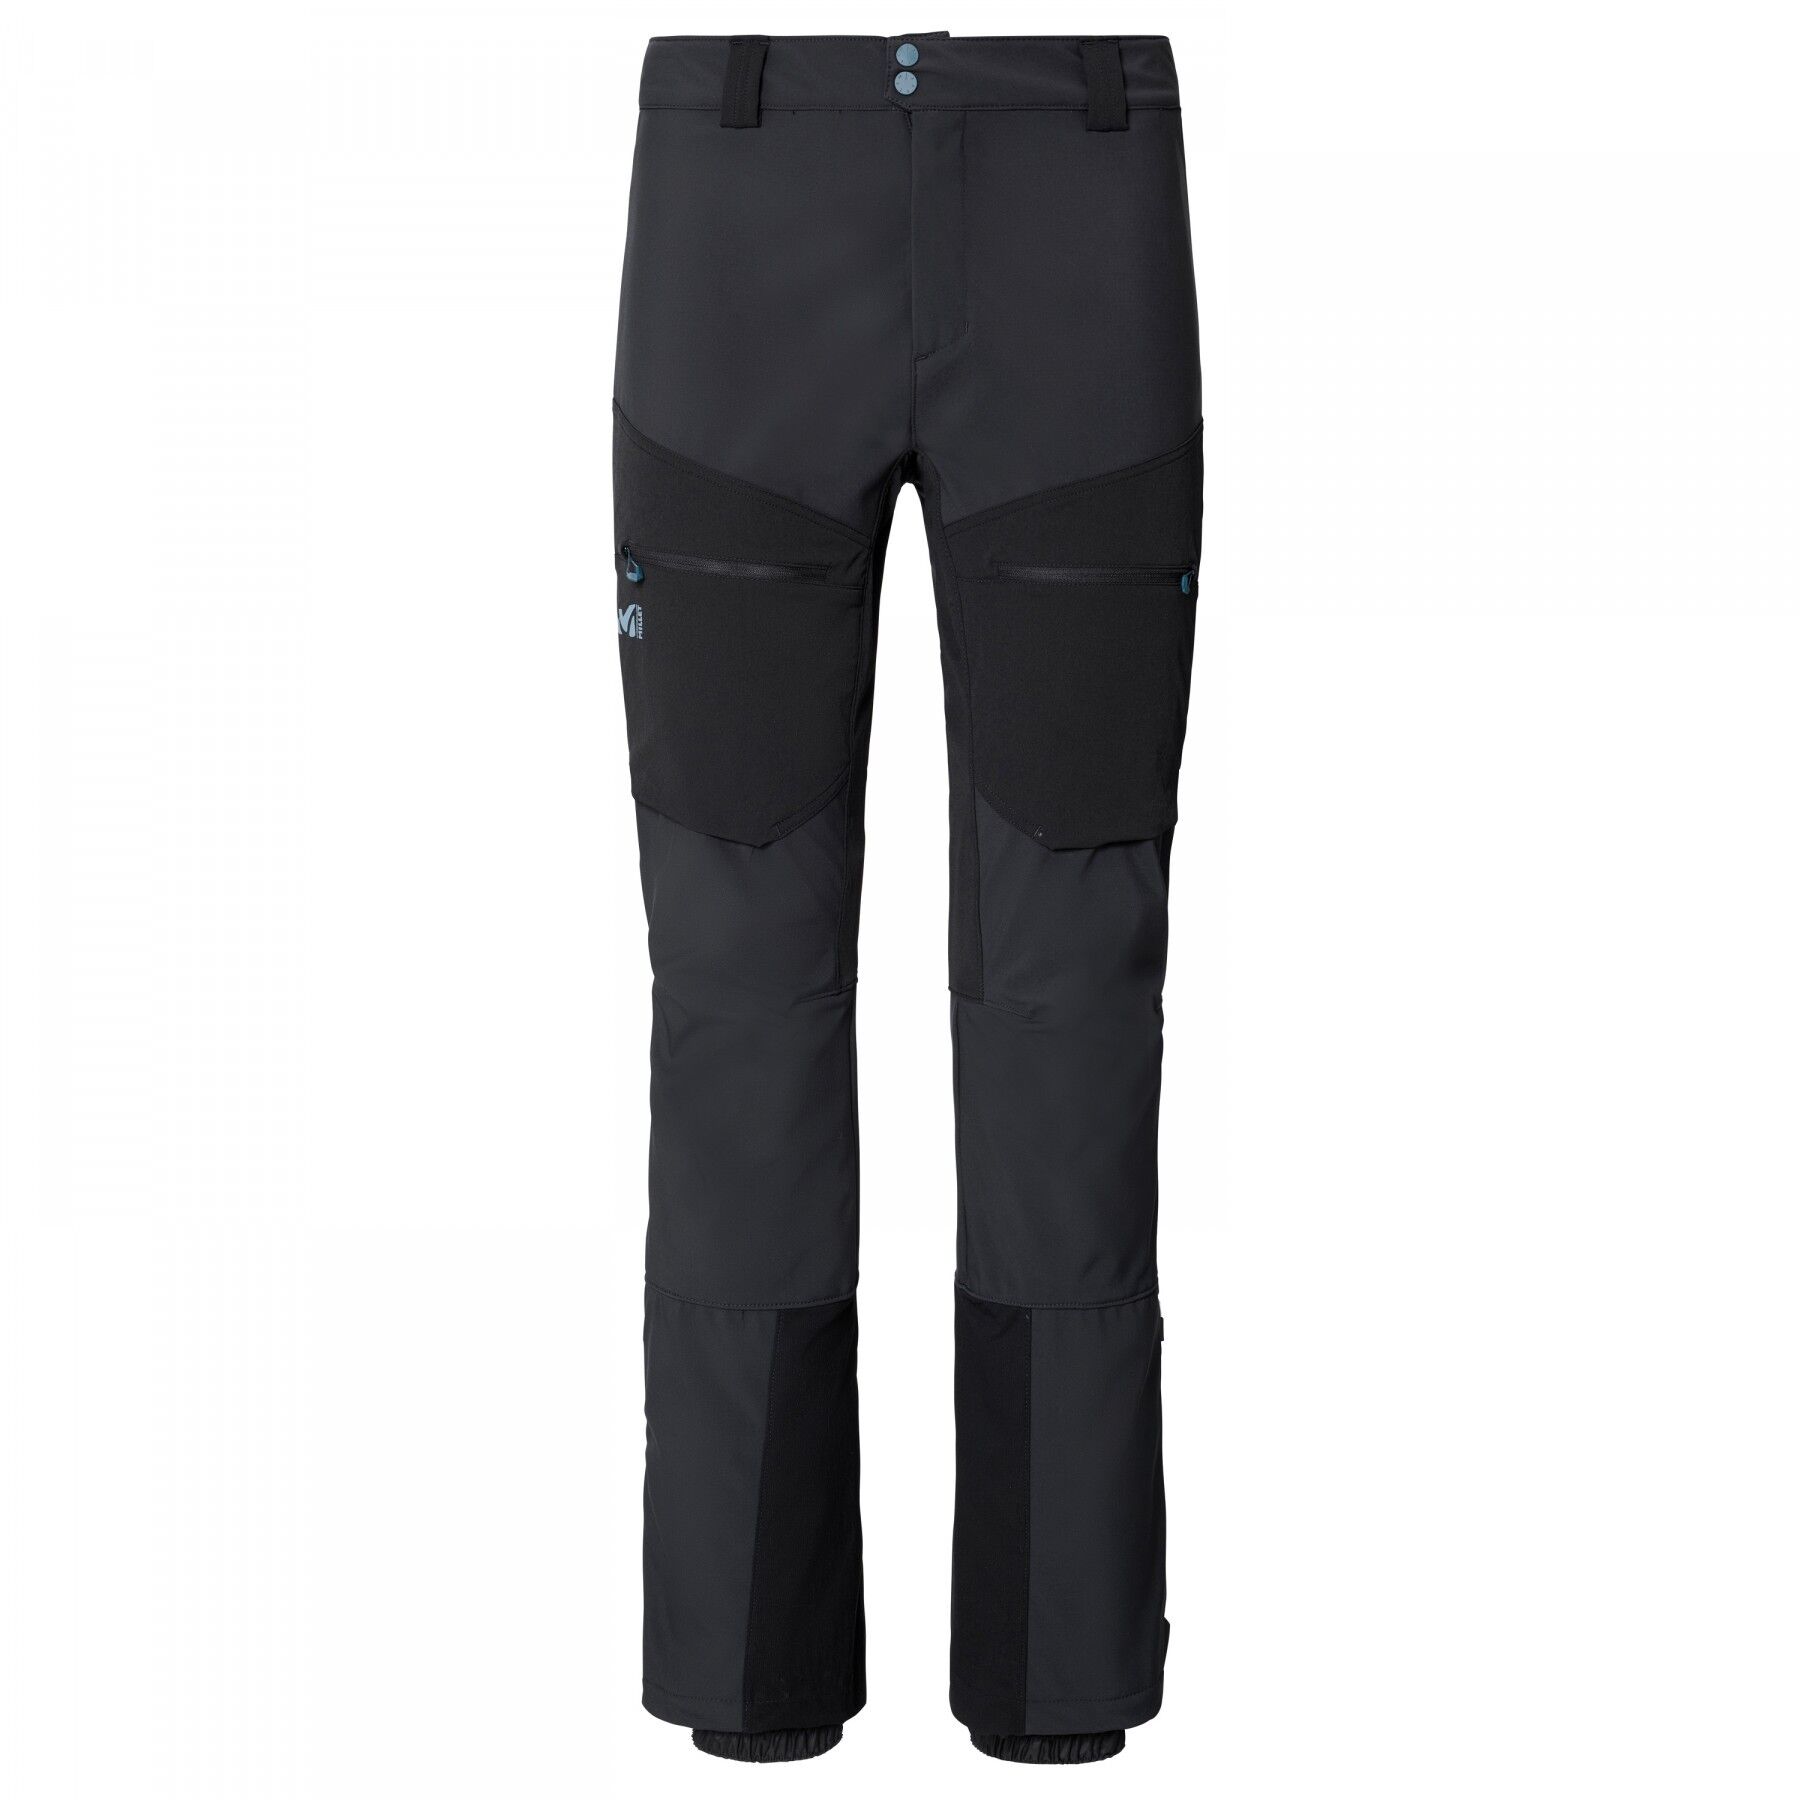 Millet Touring Shield Extreme Pm - Ski trousers - Men's